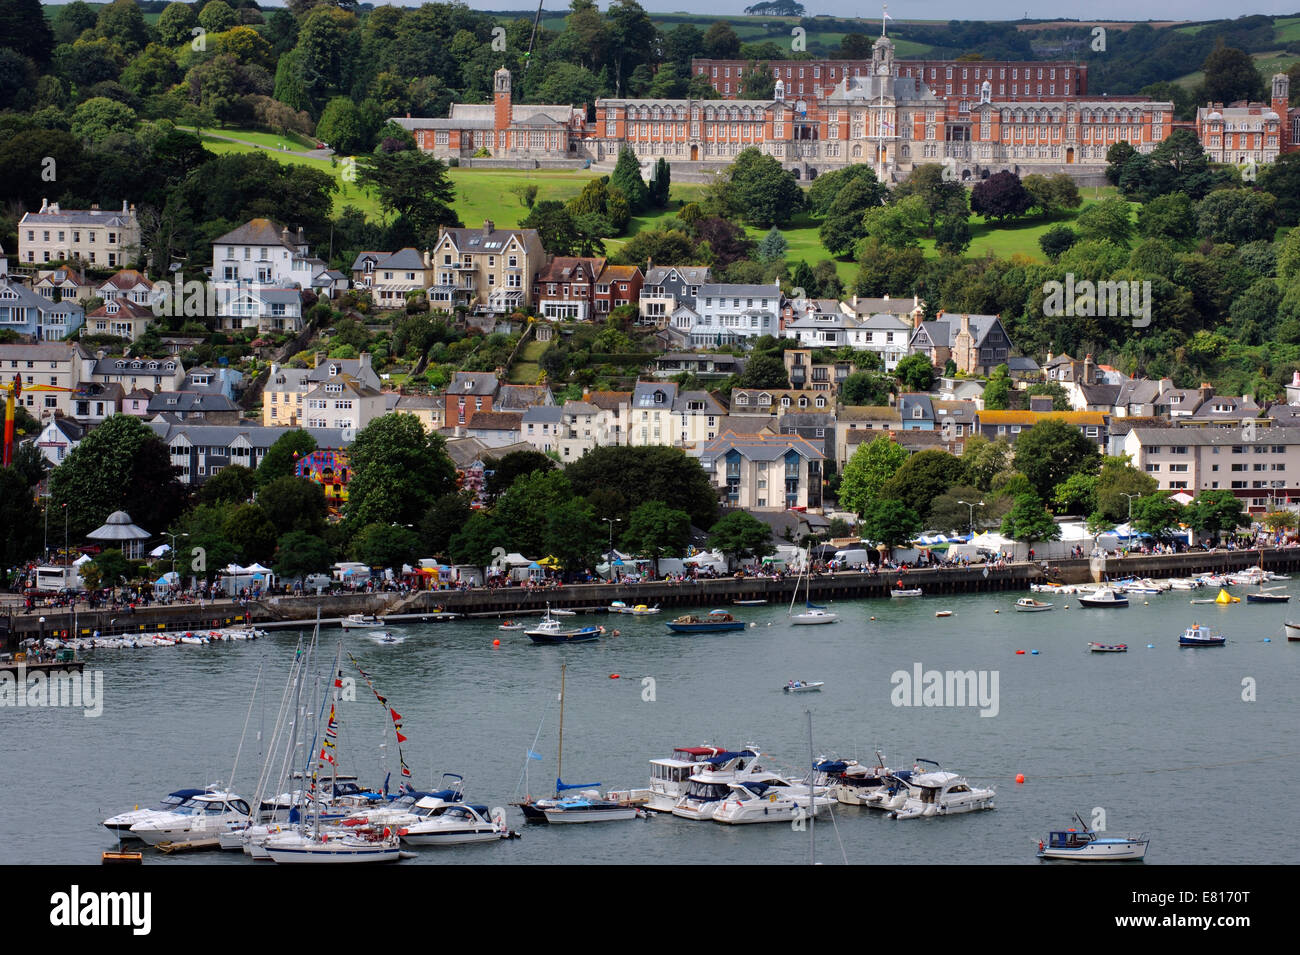 The Royal Navy Academy above the River Dart in Dartmouth, Devon, England Stock Photo